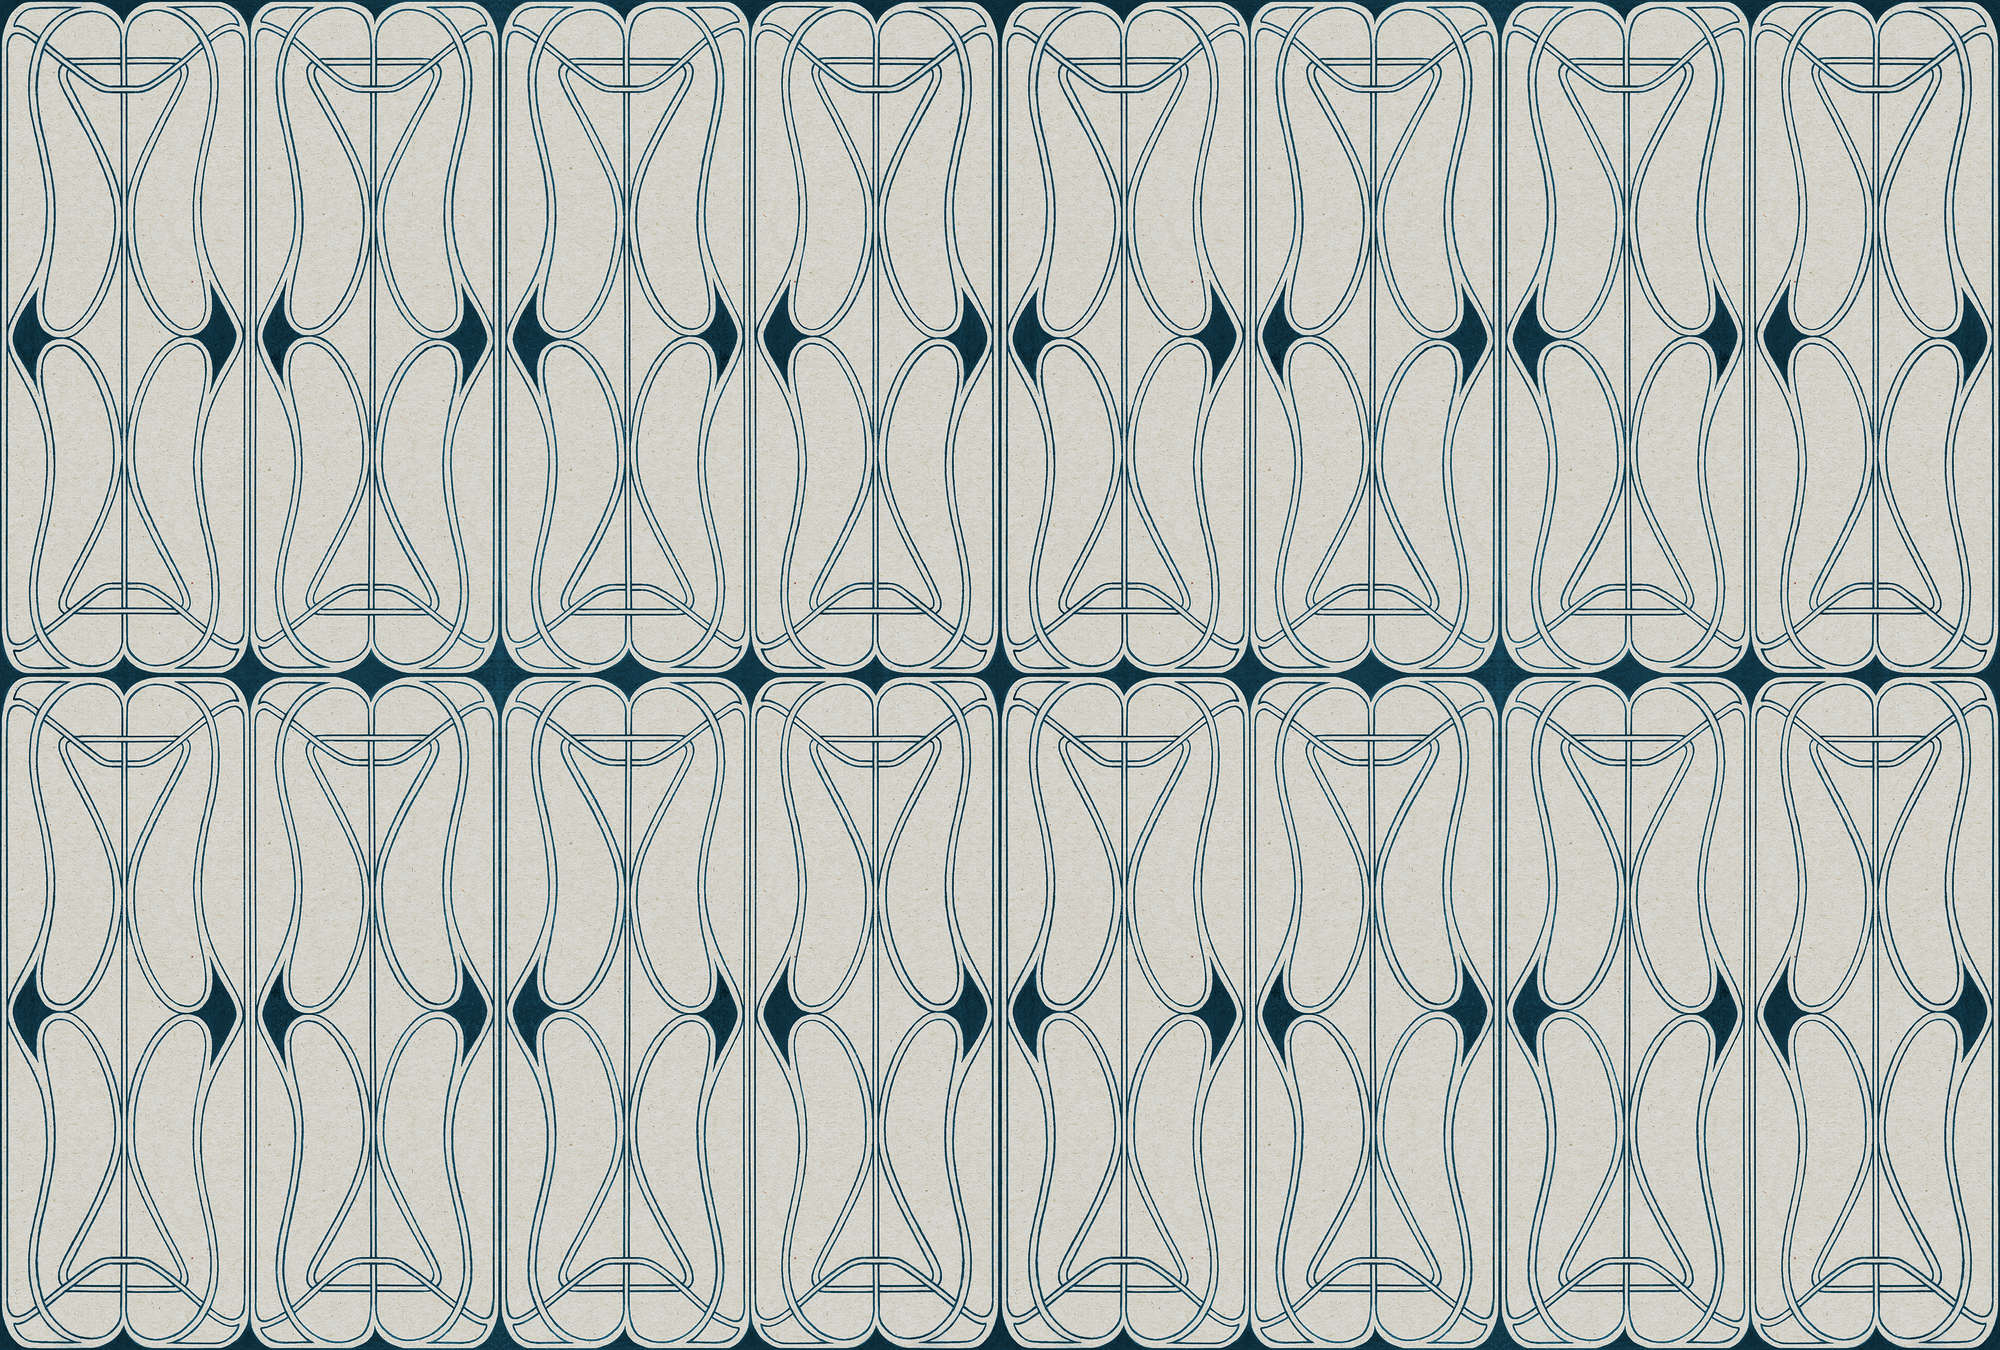             Astoria 1 – Fototapete Art Nouveau Muster Grau & Schwarzblau
        